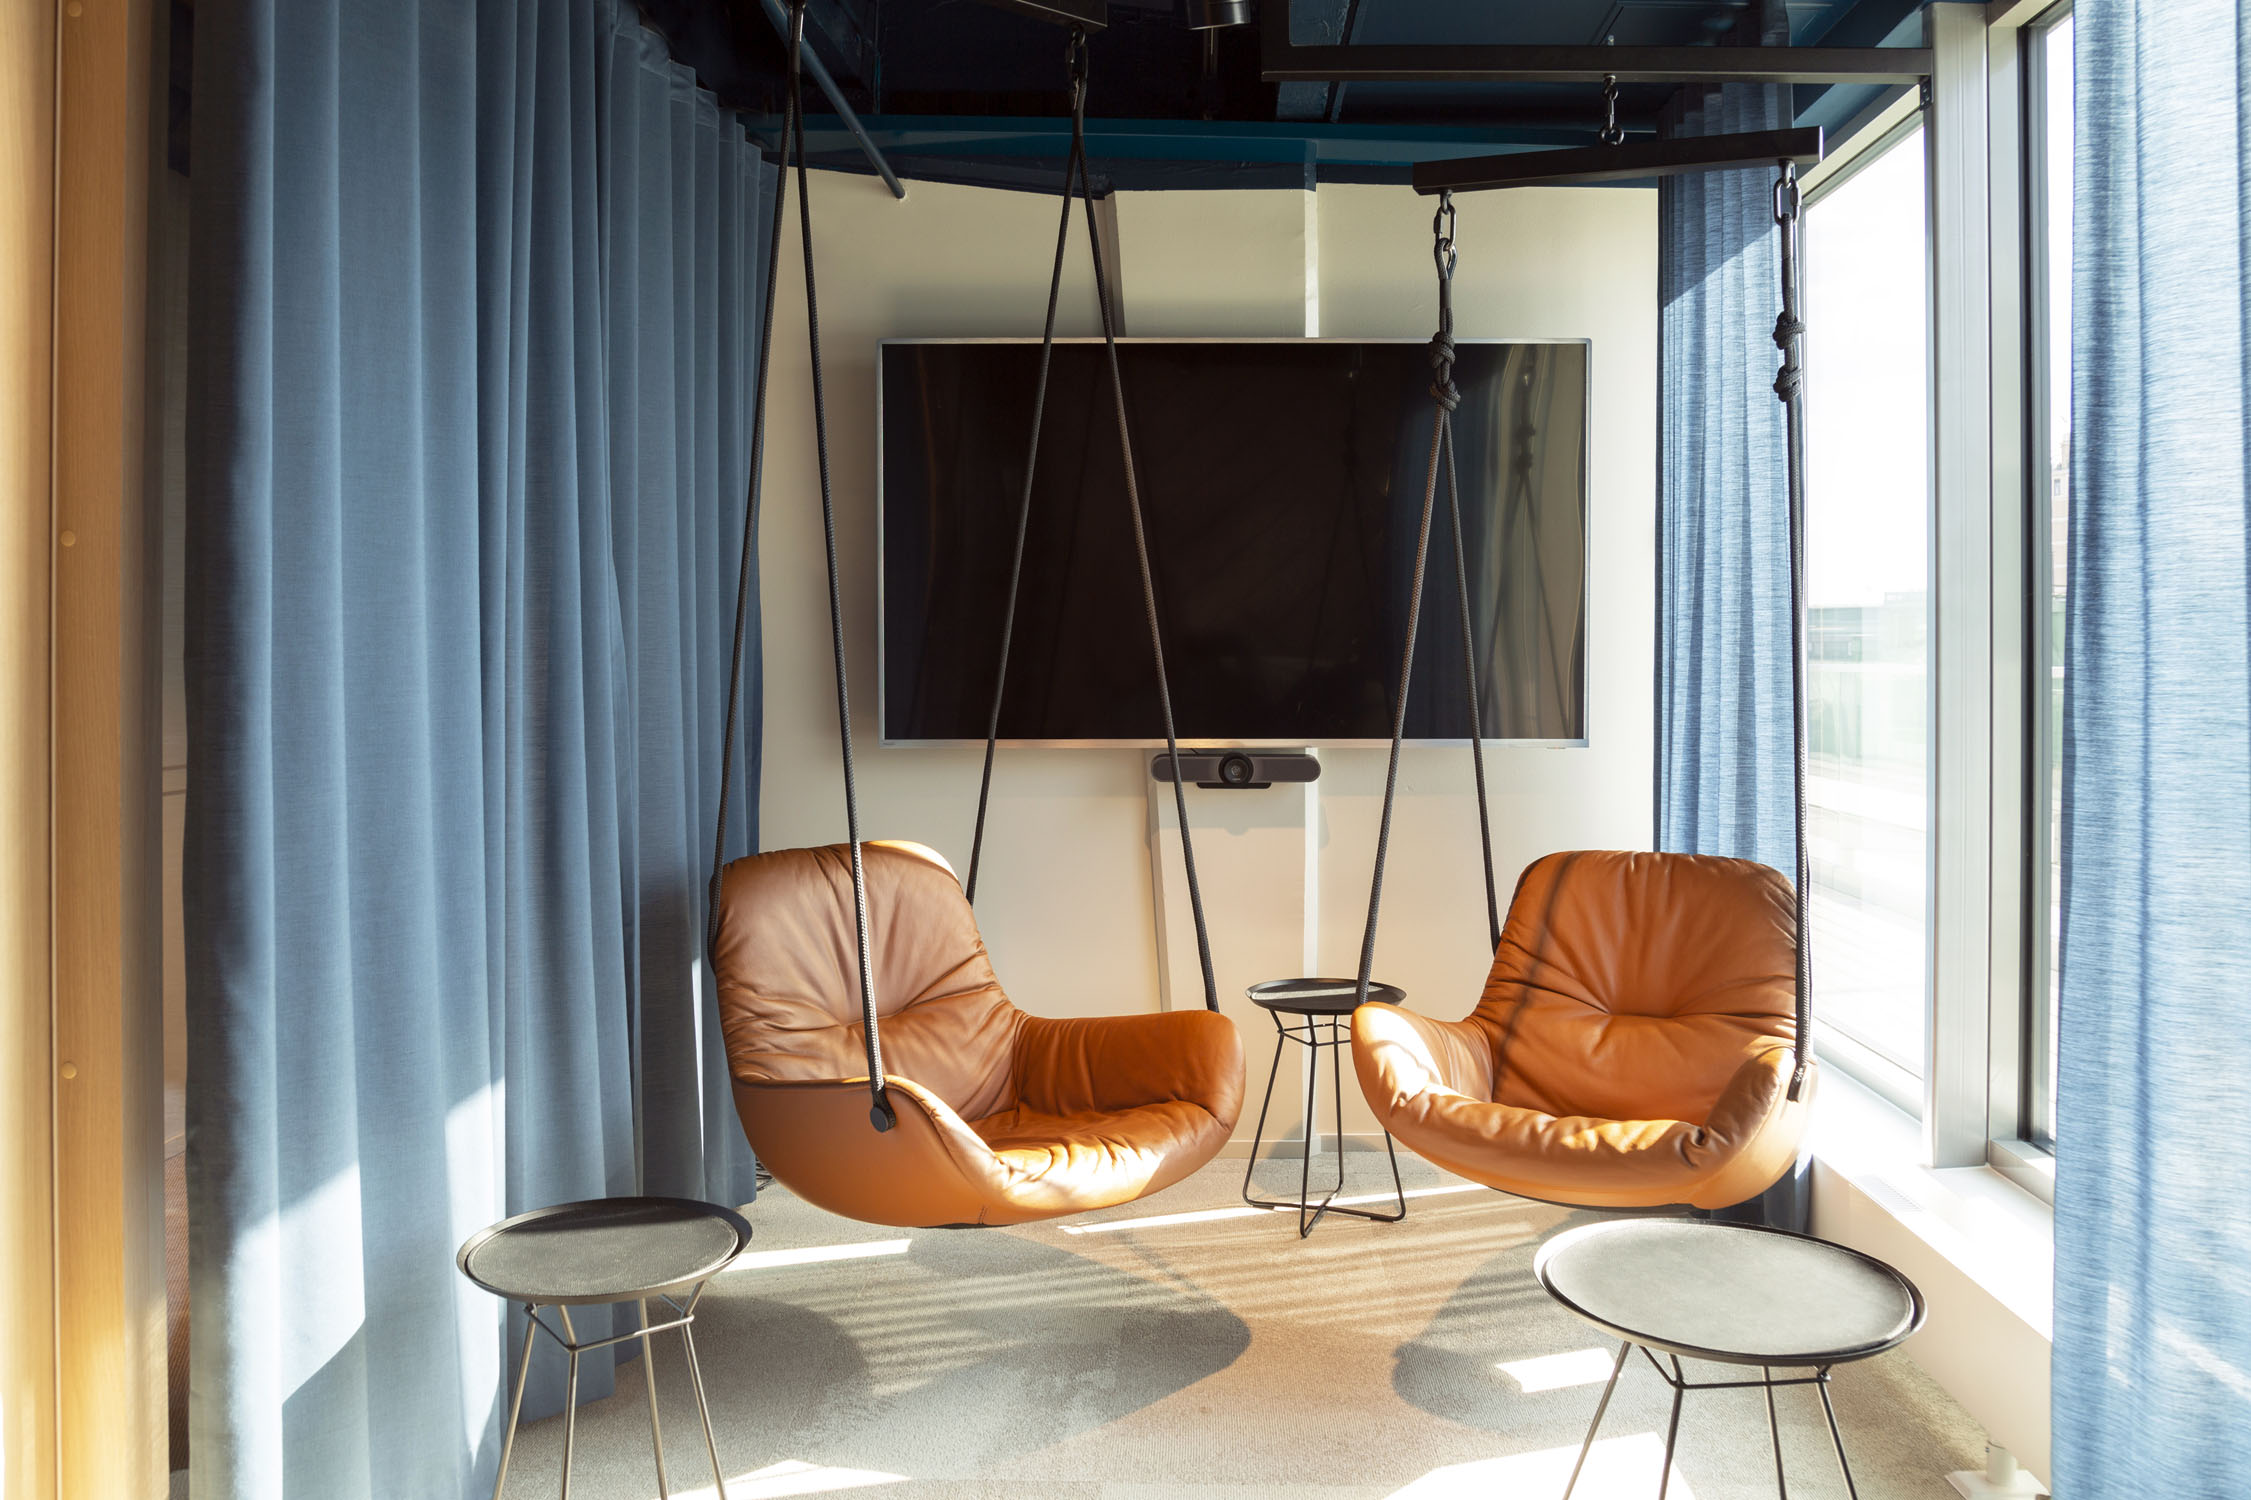 Supermetrics office meeting room swing chairs